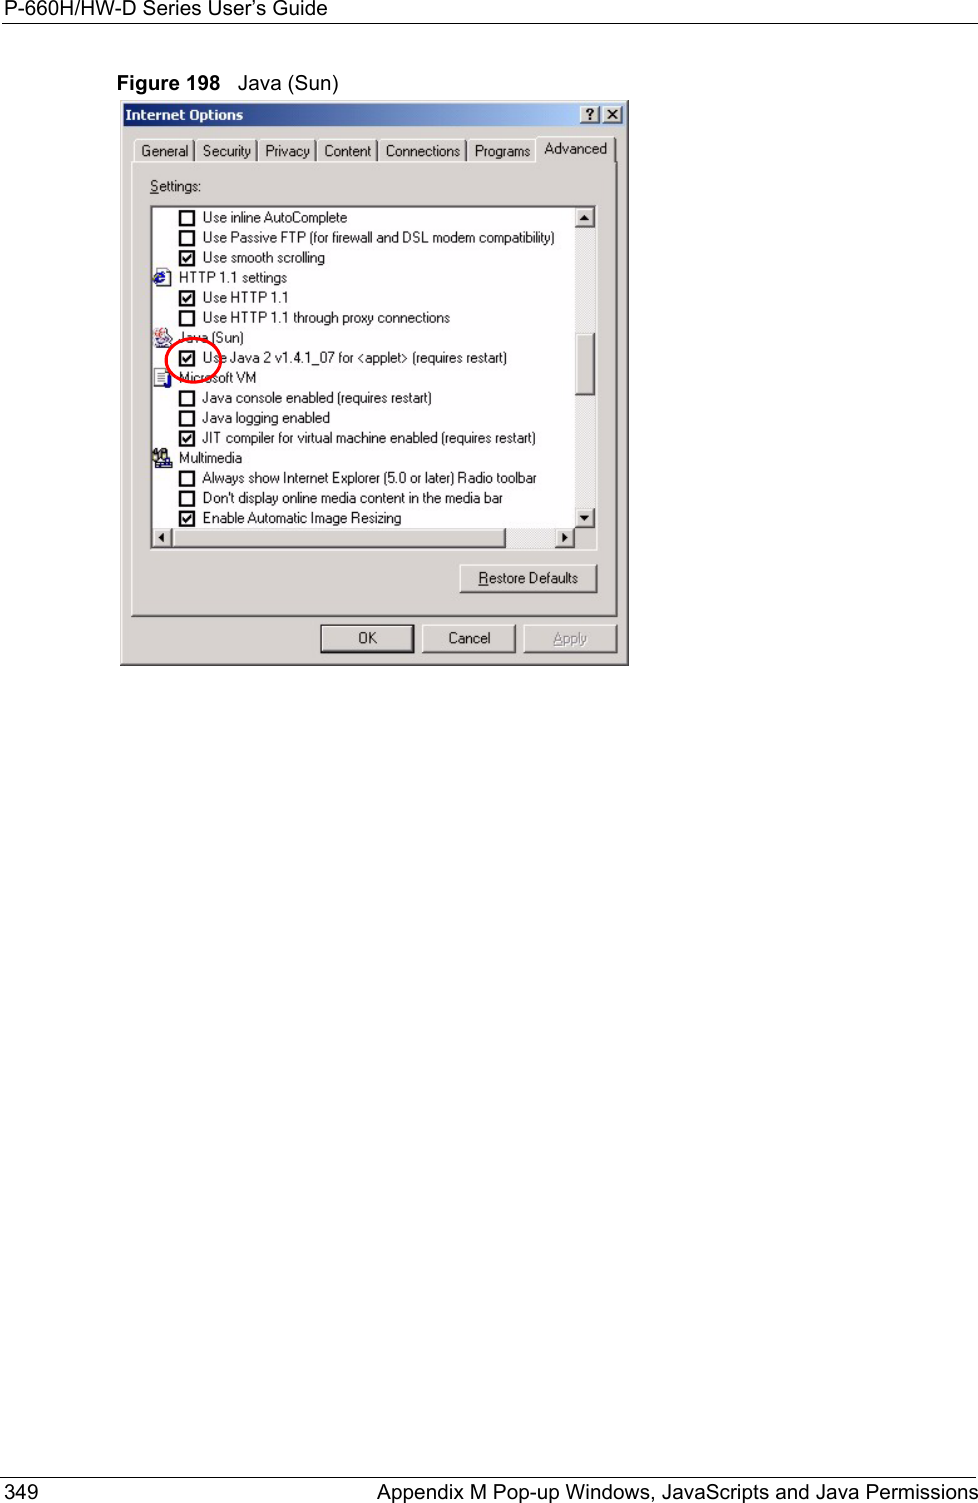 P-660H/HW-D Series User’s Guide349 Appendix M Pop-up Windows, JavaScripts and Java PermissionsFigure 198   Java (Sun)